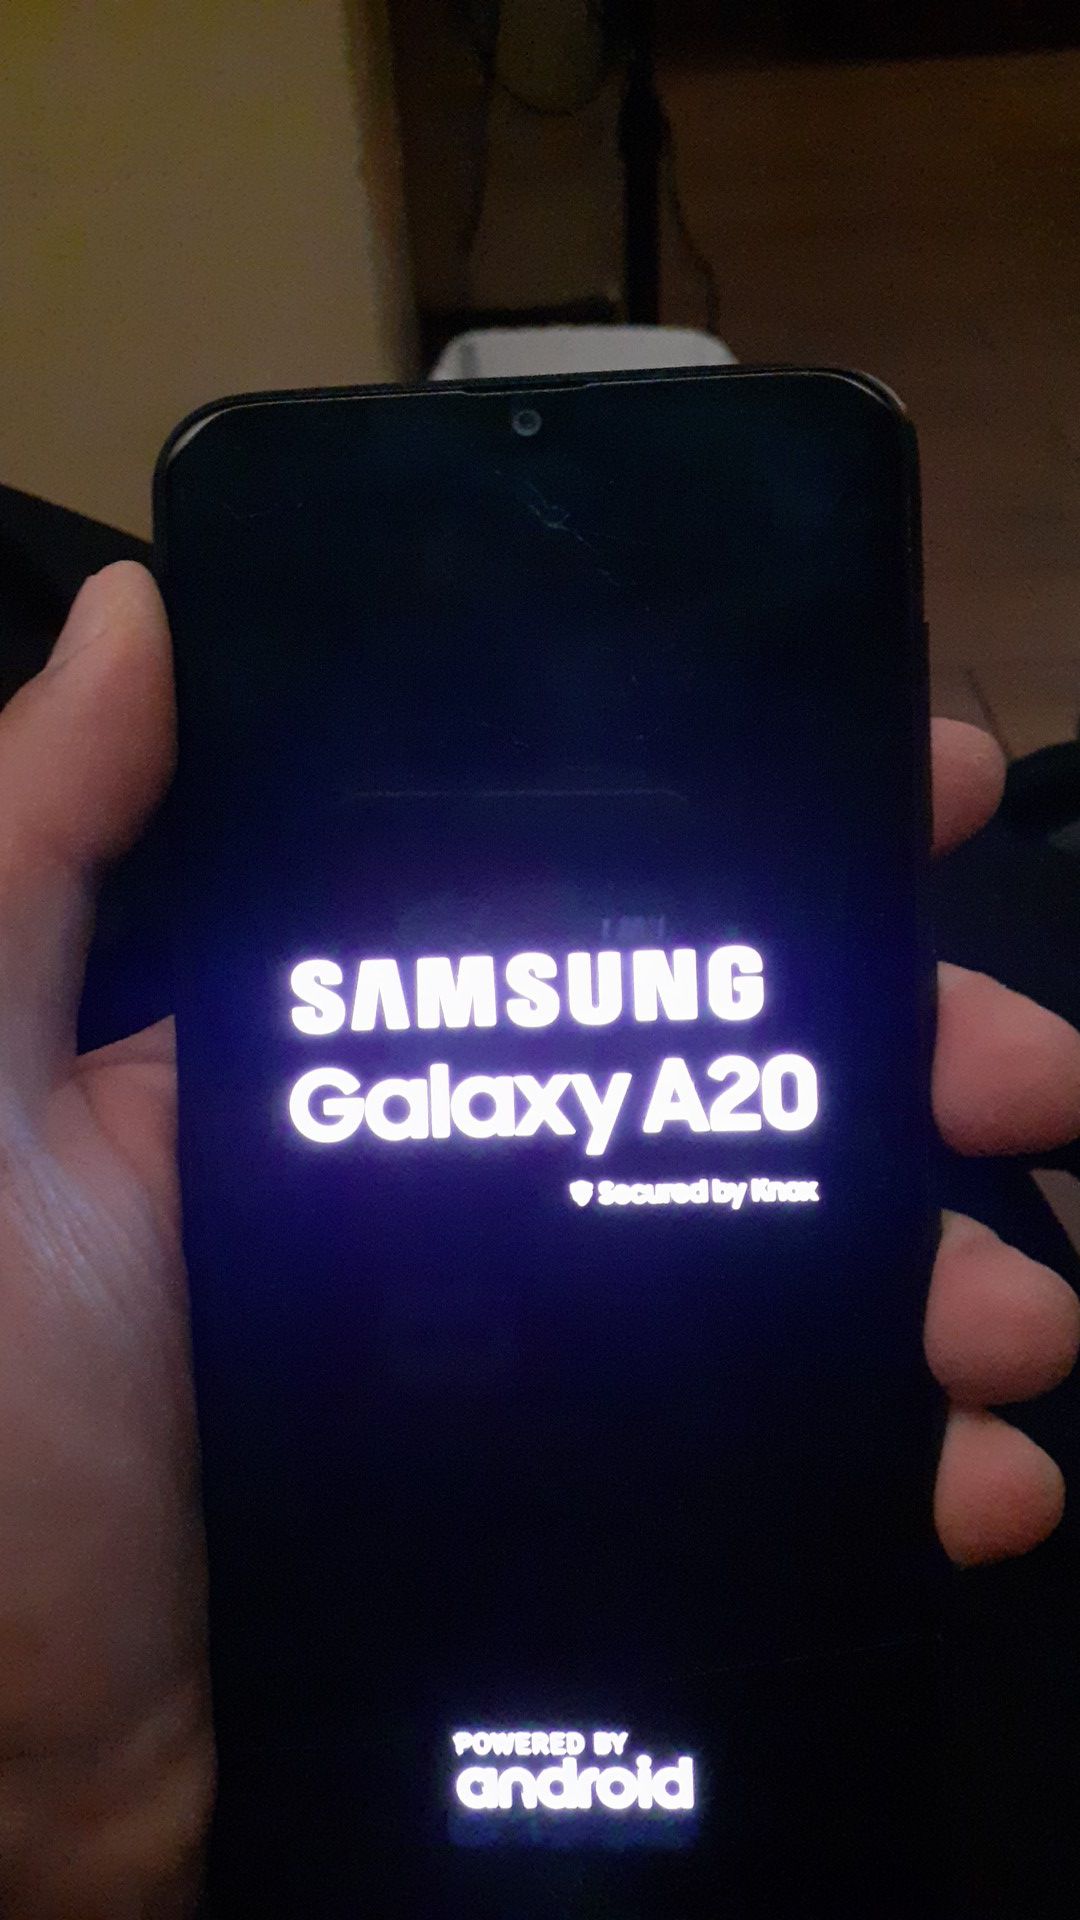 Samsung Galaxy A20 phone